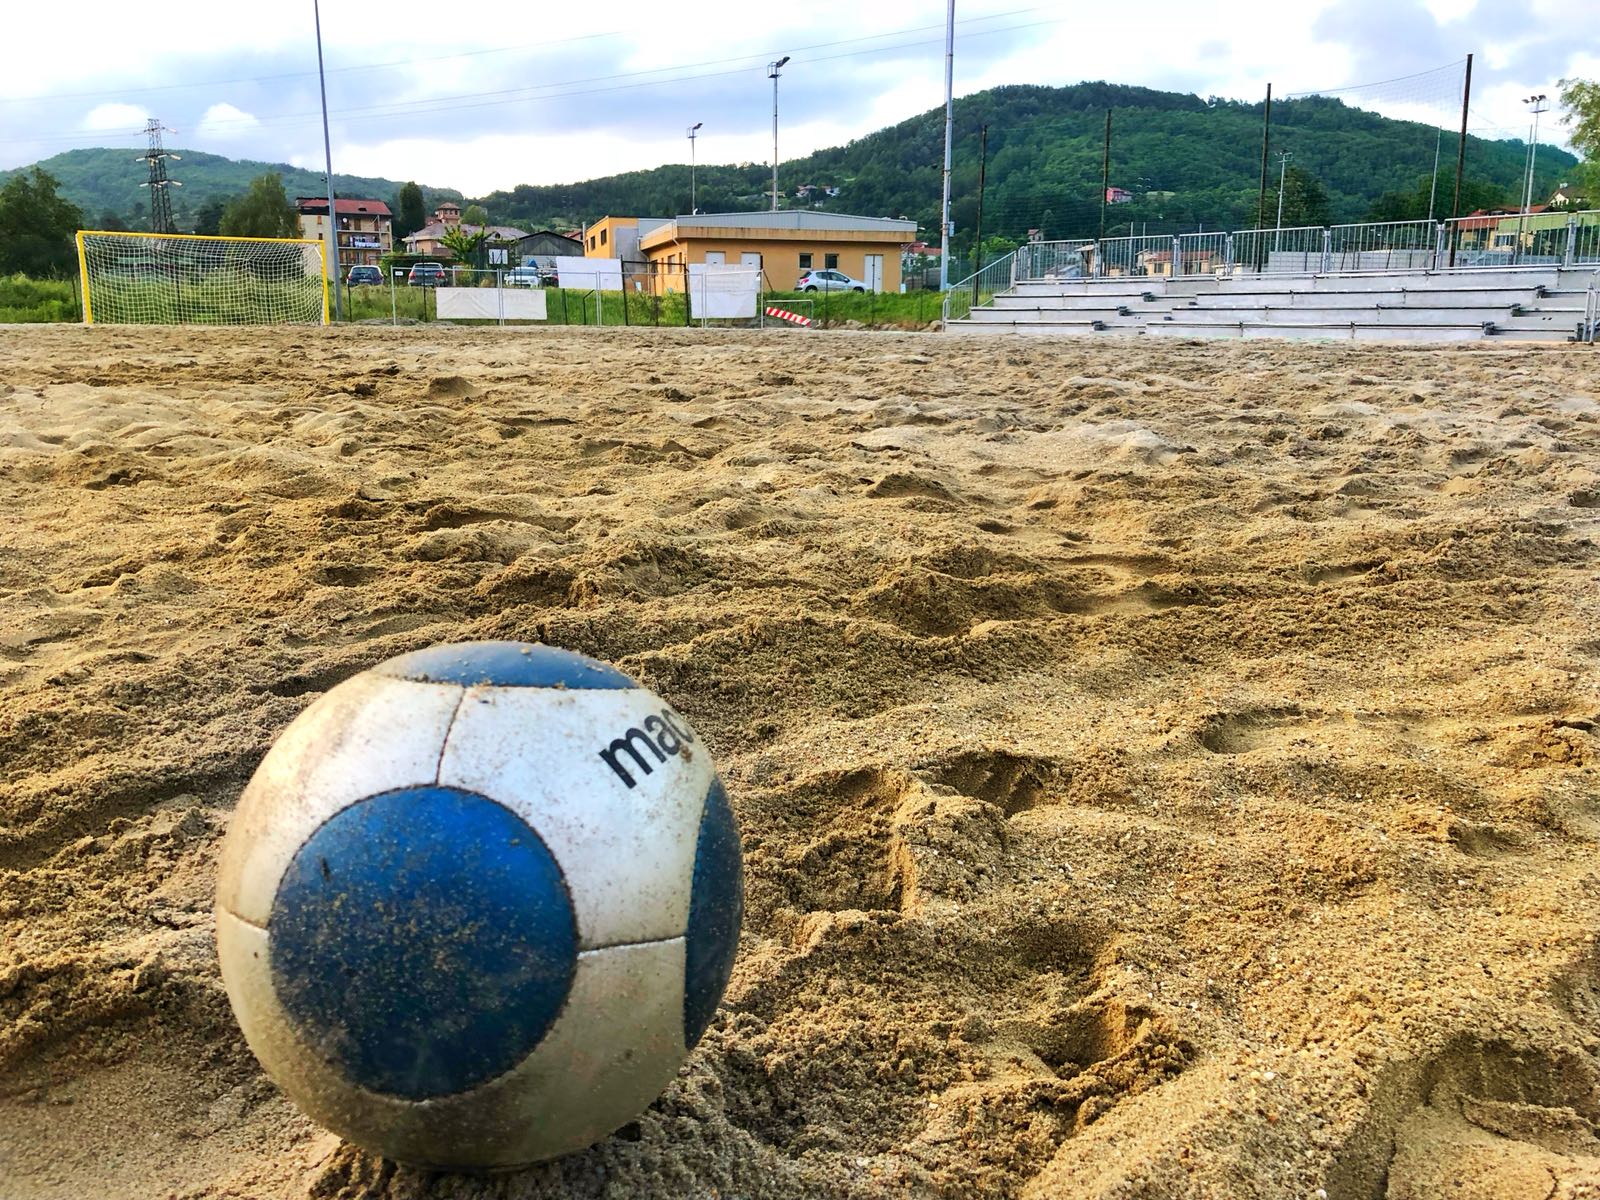 Liguria Beach Soccer Cup, quattro aspiranti regine a caccia di una corona: stasera le semifinali